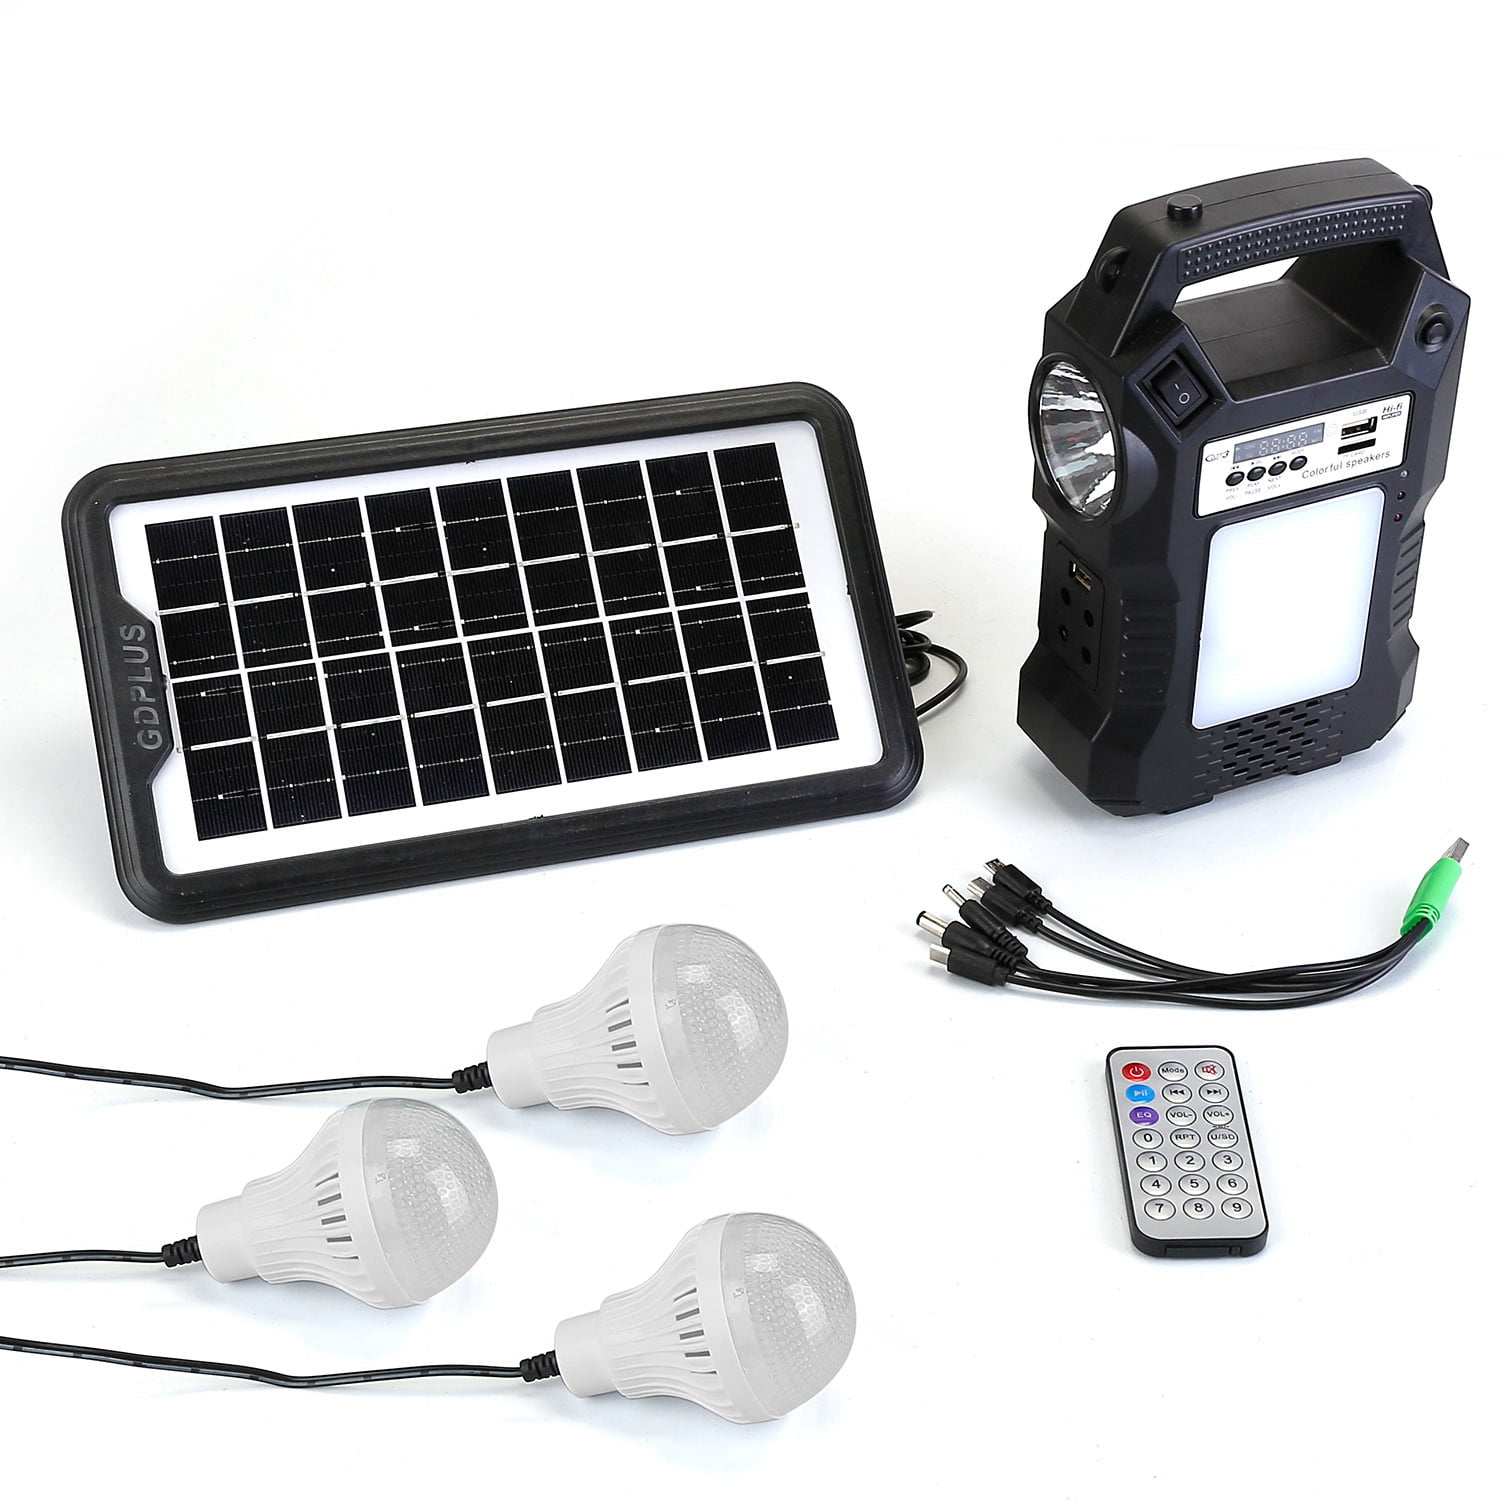 GiftRetail MO6509 - ARENA SOLAR Power bank solare 4000 mAh